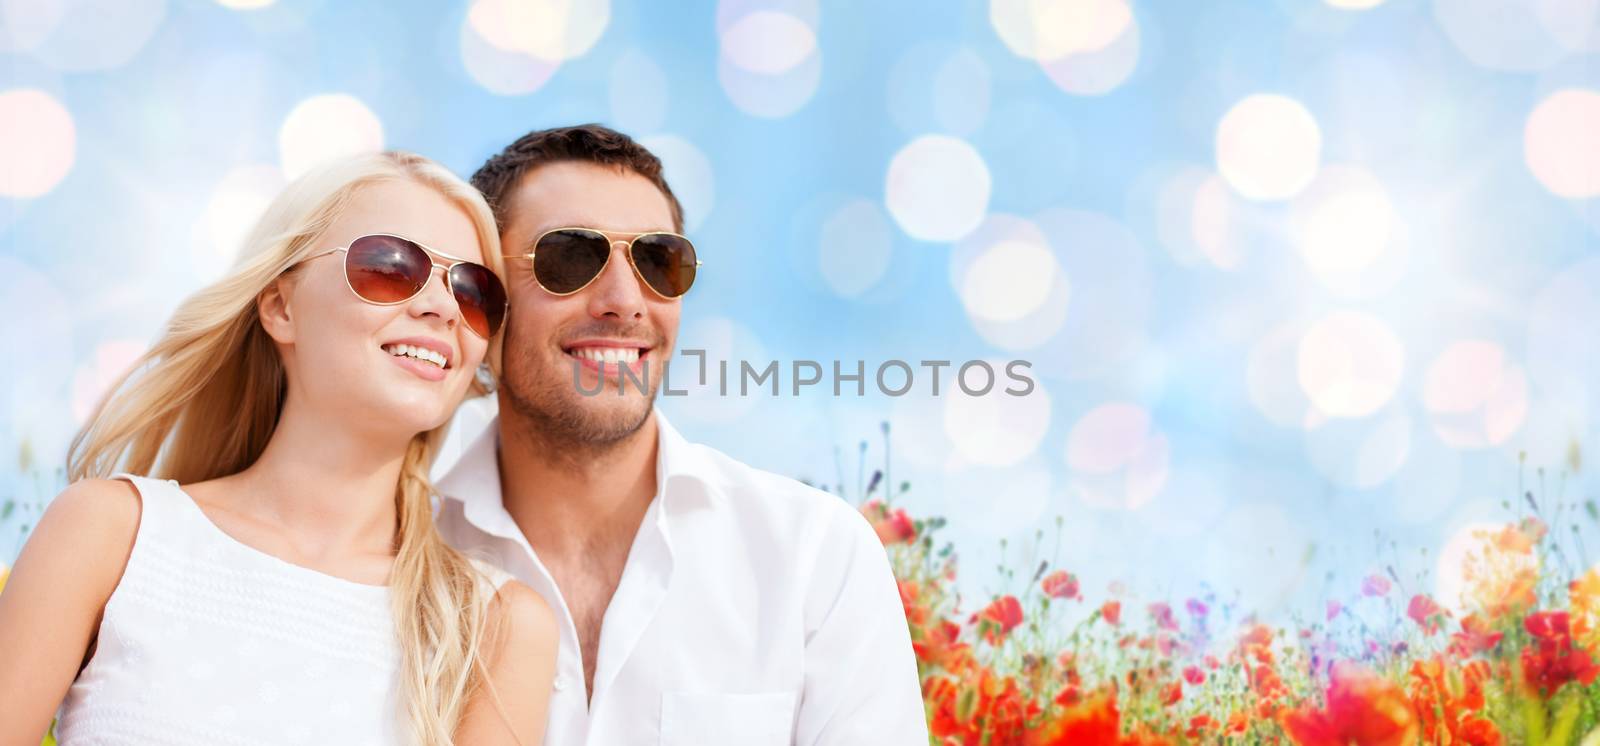 happy couple in shades over poppy field background by dolgachov